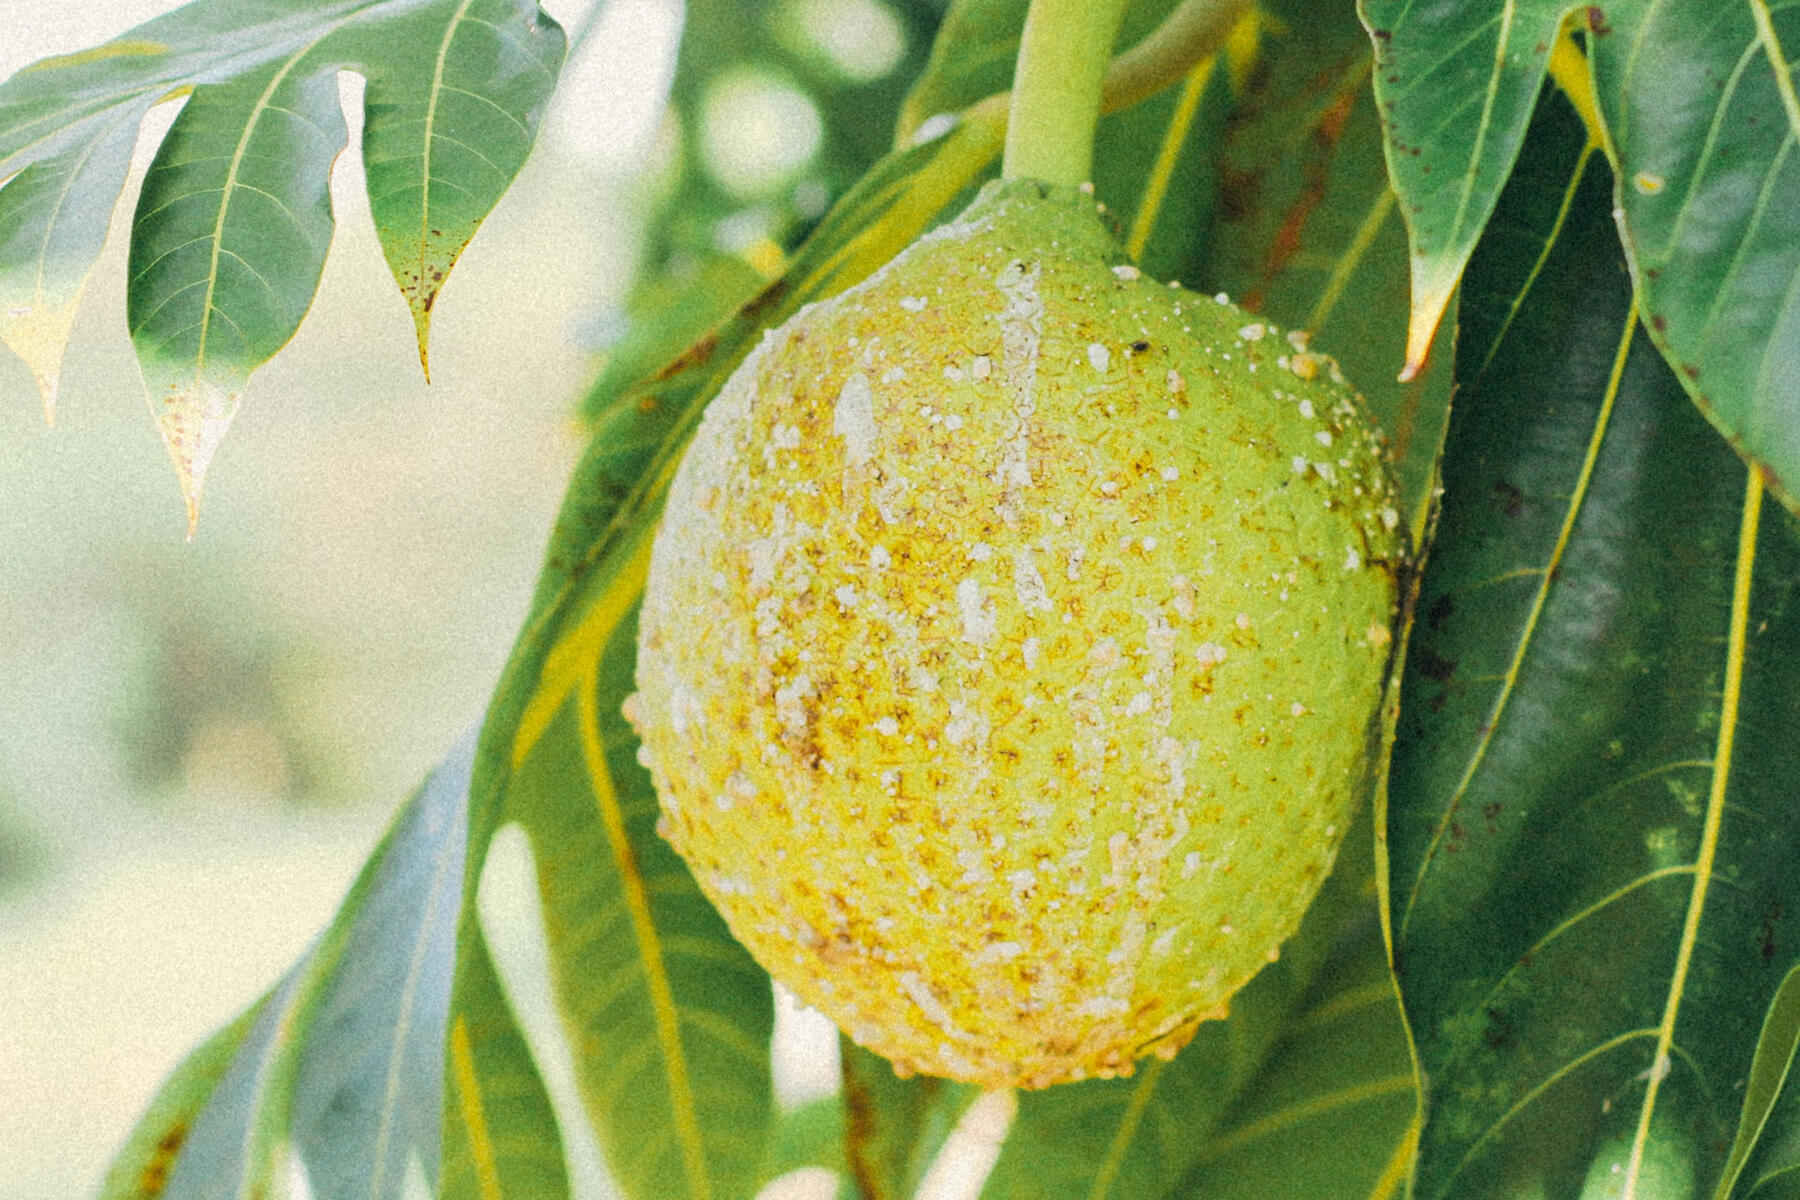 A photo of Hawaiian ʻUlu (breadfruit), taken from Kauaʻi, Hawaiʻi.